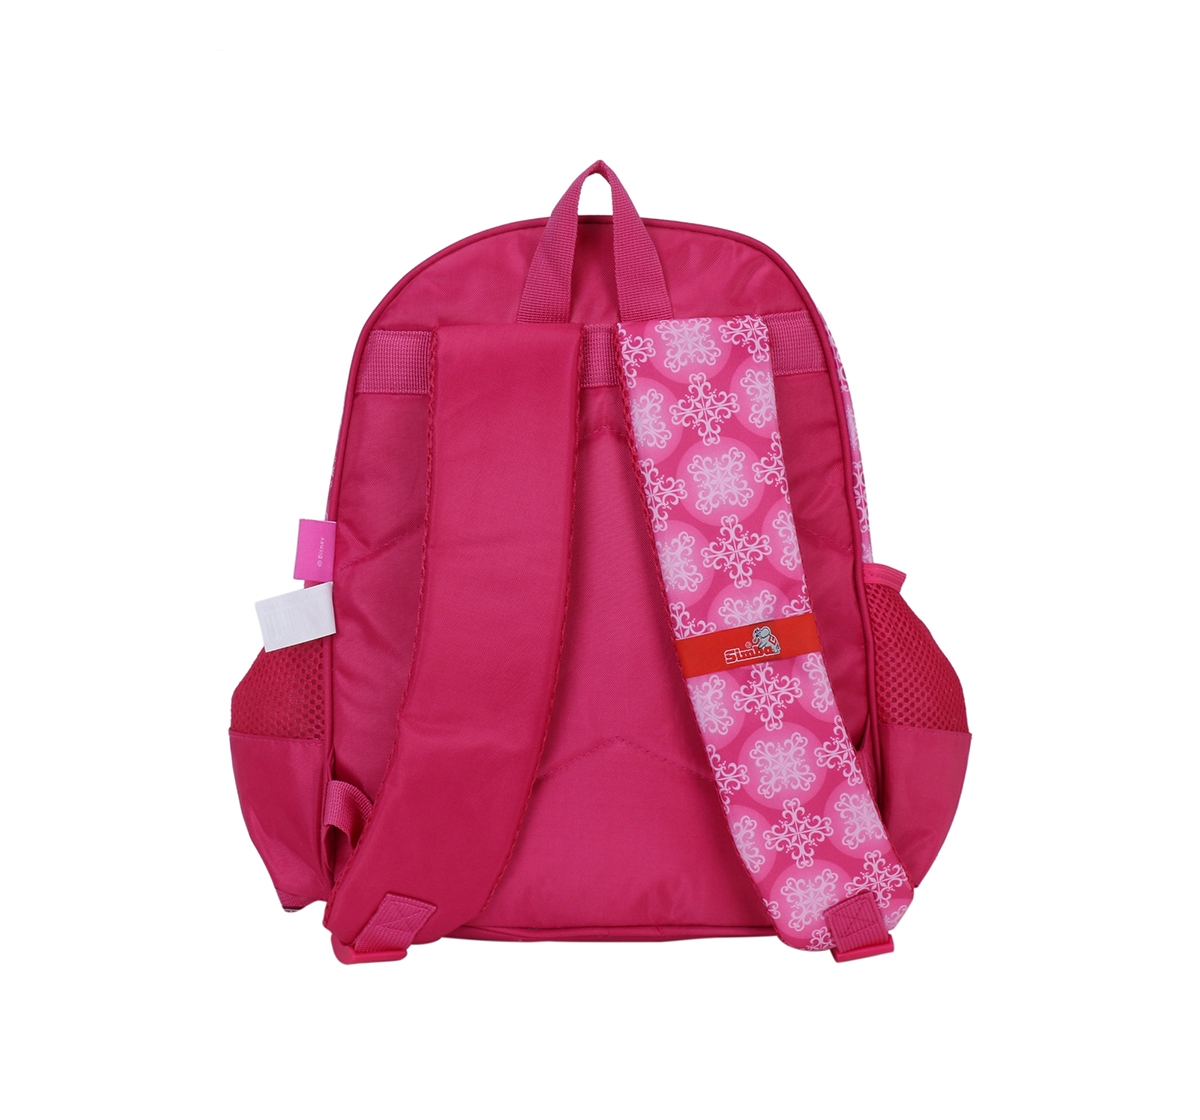 DISNEY | Disney Princess Castle 18" Backpack Bags for Girls age 3Y+  4